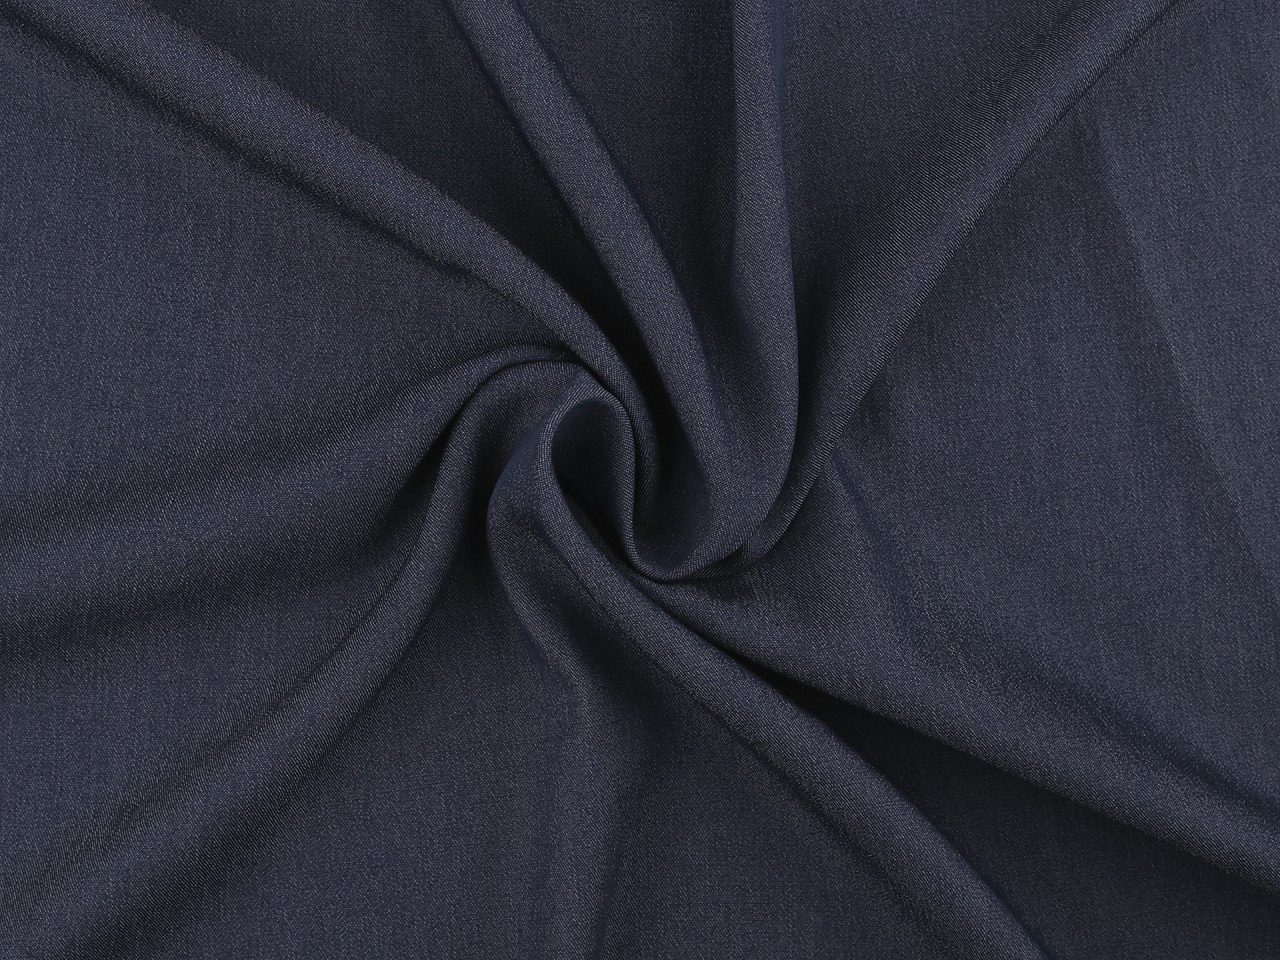 Šatovka, imitace rifloviny, barva 2 (5) jeans žíhaný